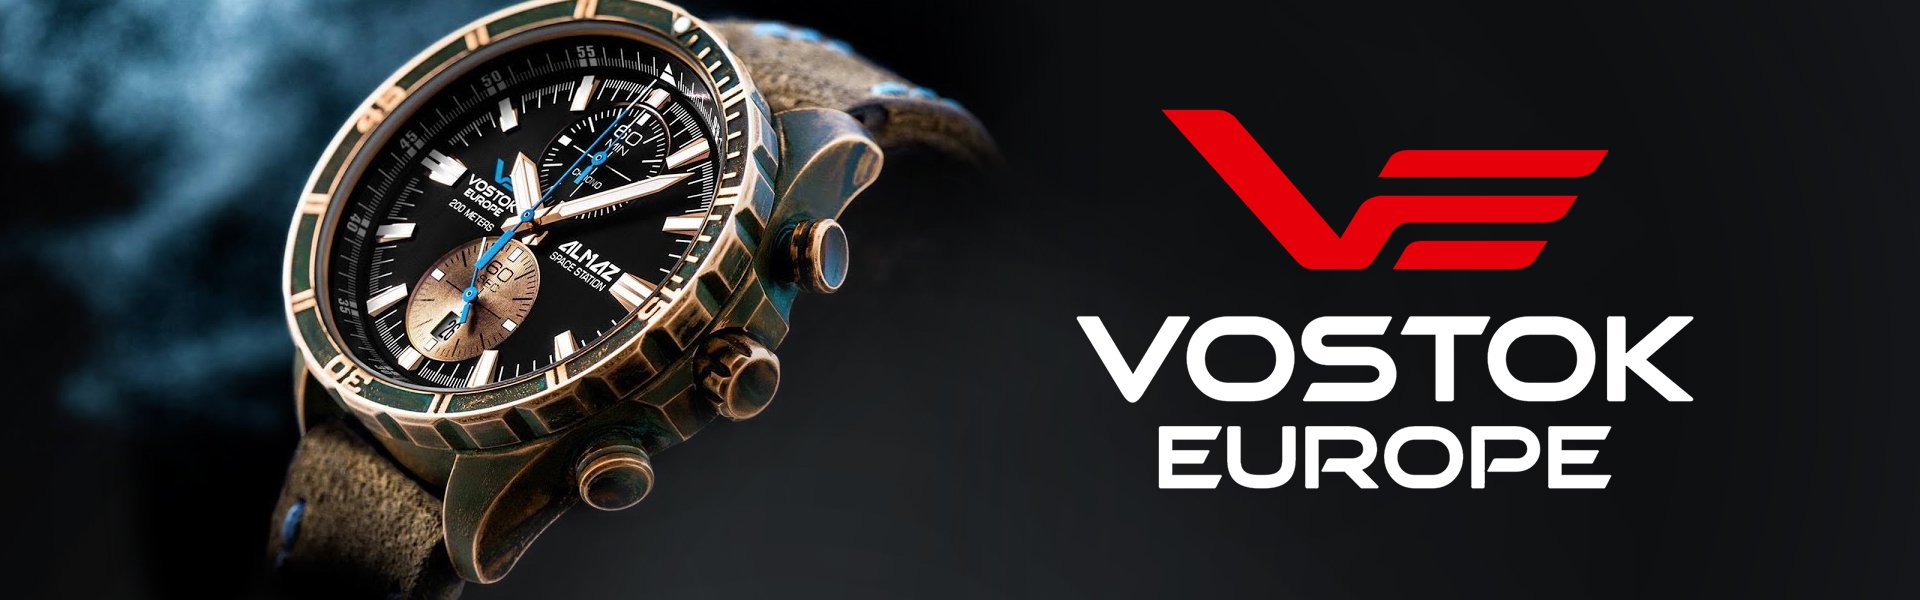 Käekell Vostok YM86-640A695 Vostok Europe